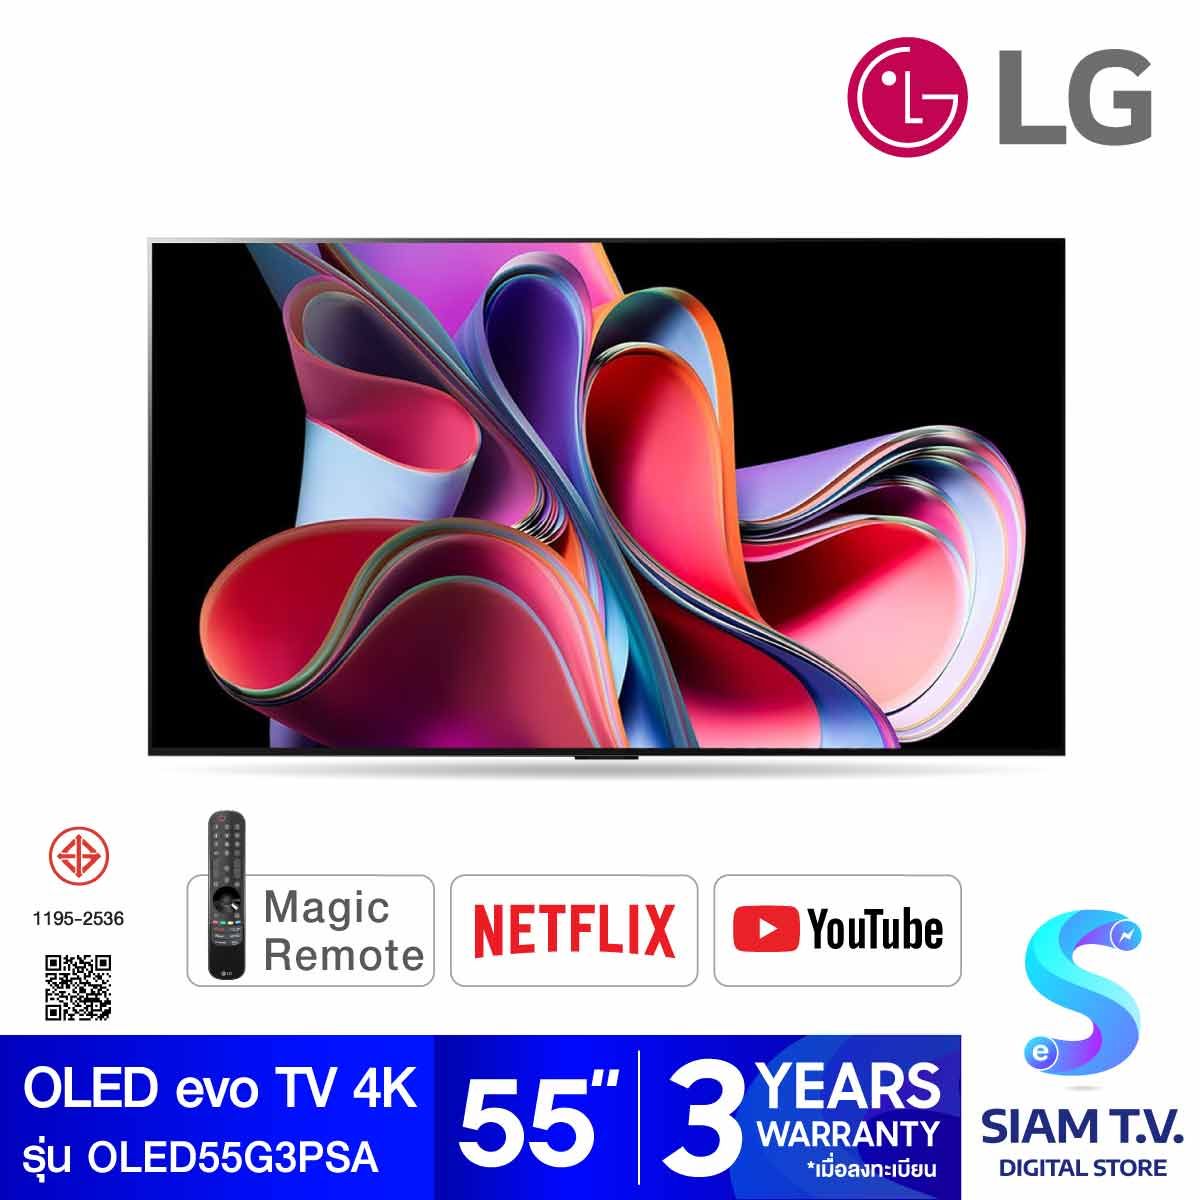 LG OLED evo 4K Smart TV 120Hz  รุ่น OLED55G3PSA OLED TV สมาร์ททีวี 55  Magic Remote ThinQ AI